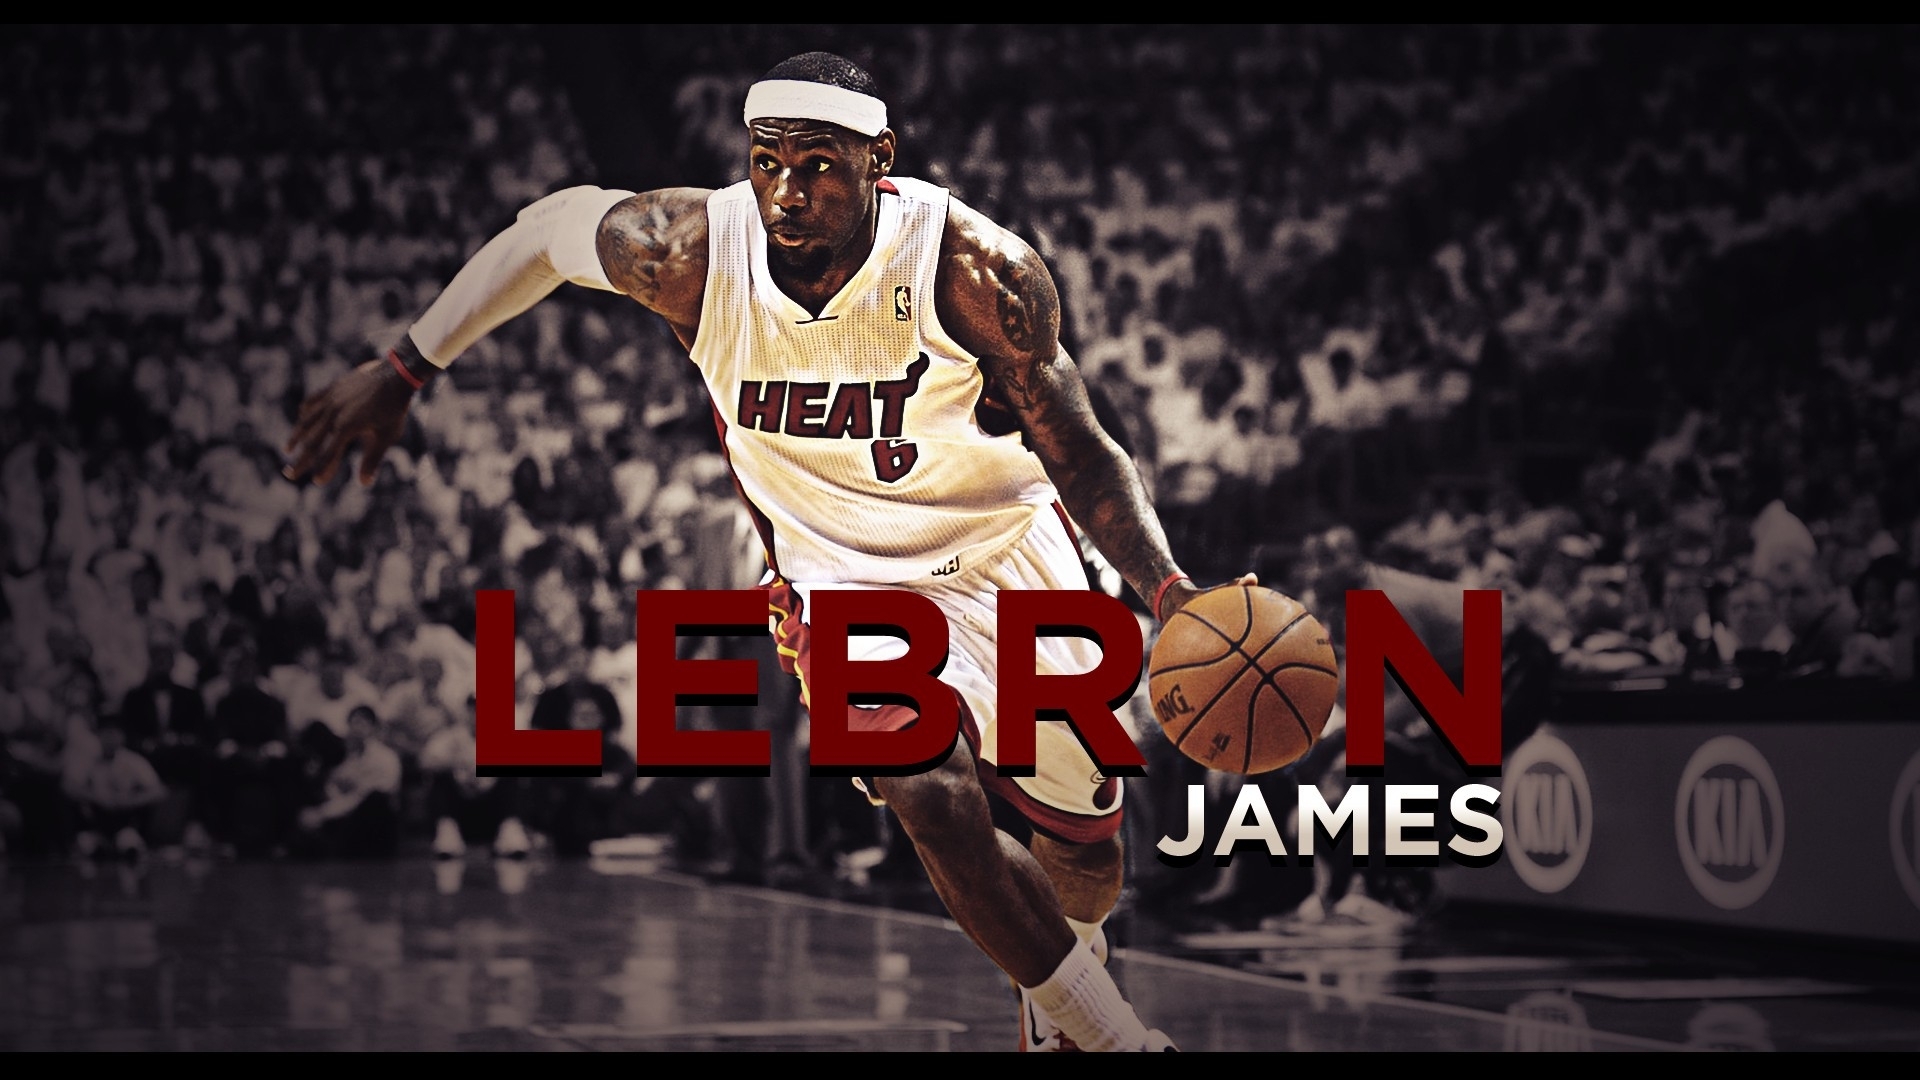 Nba Lebron James Miami Heat Mvp Basketball nba wallpaper Wallpaper